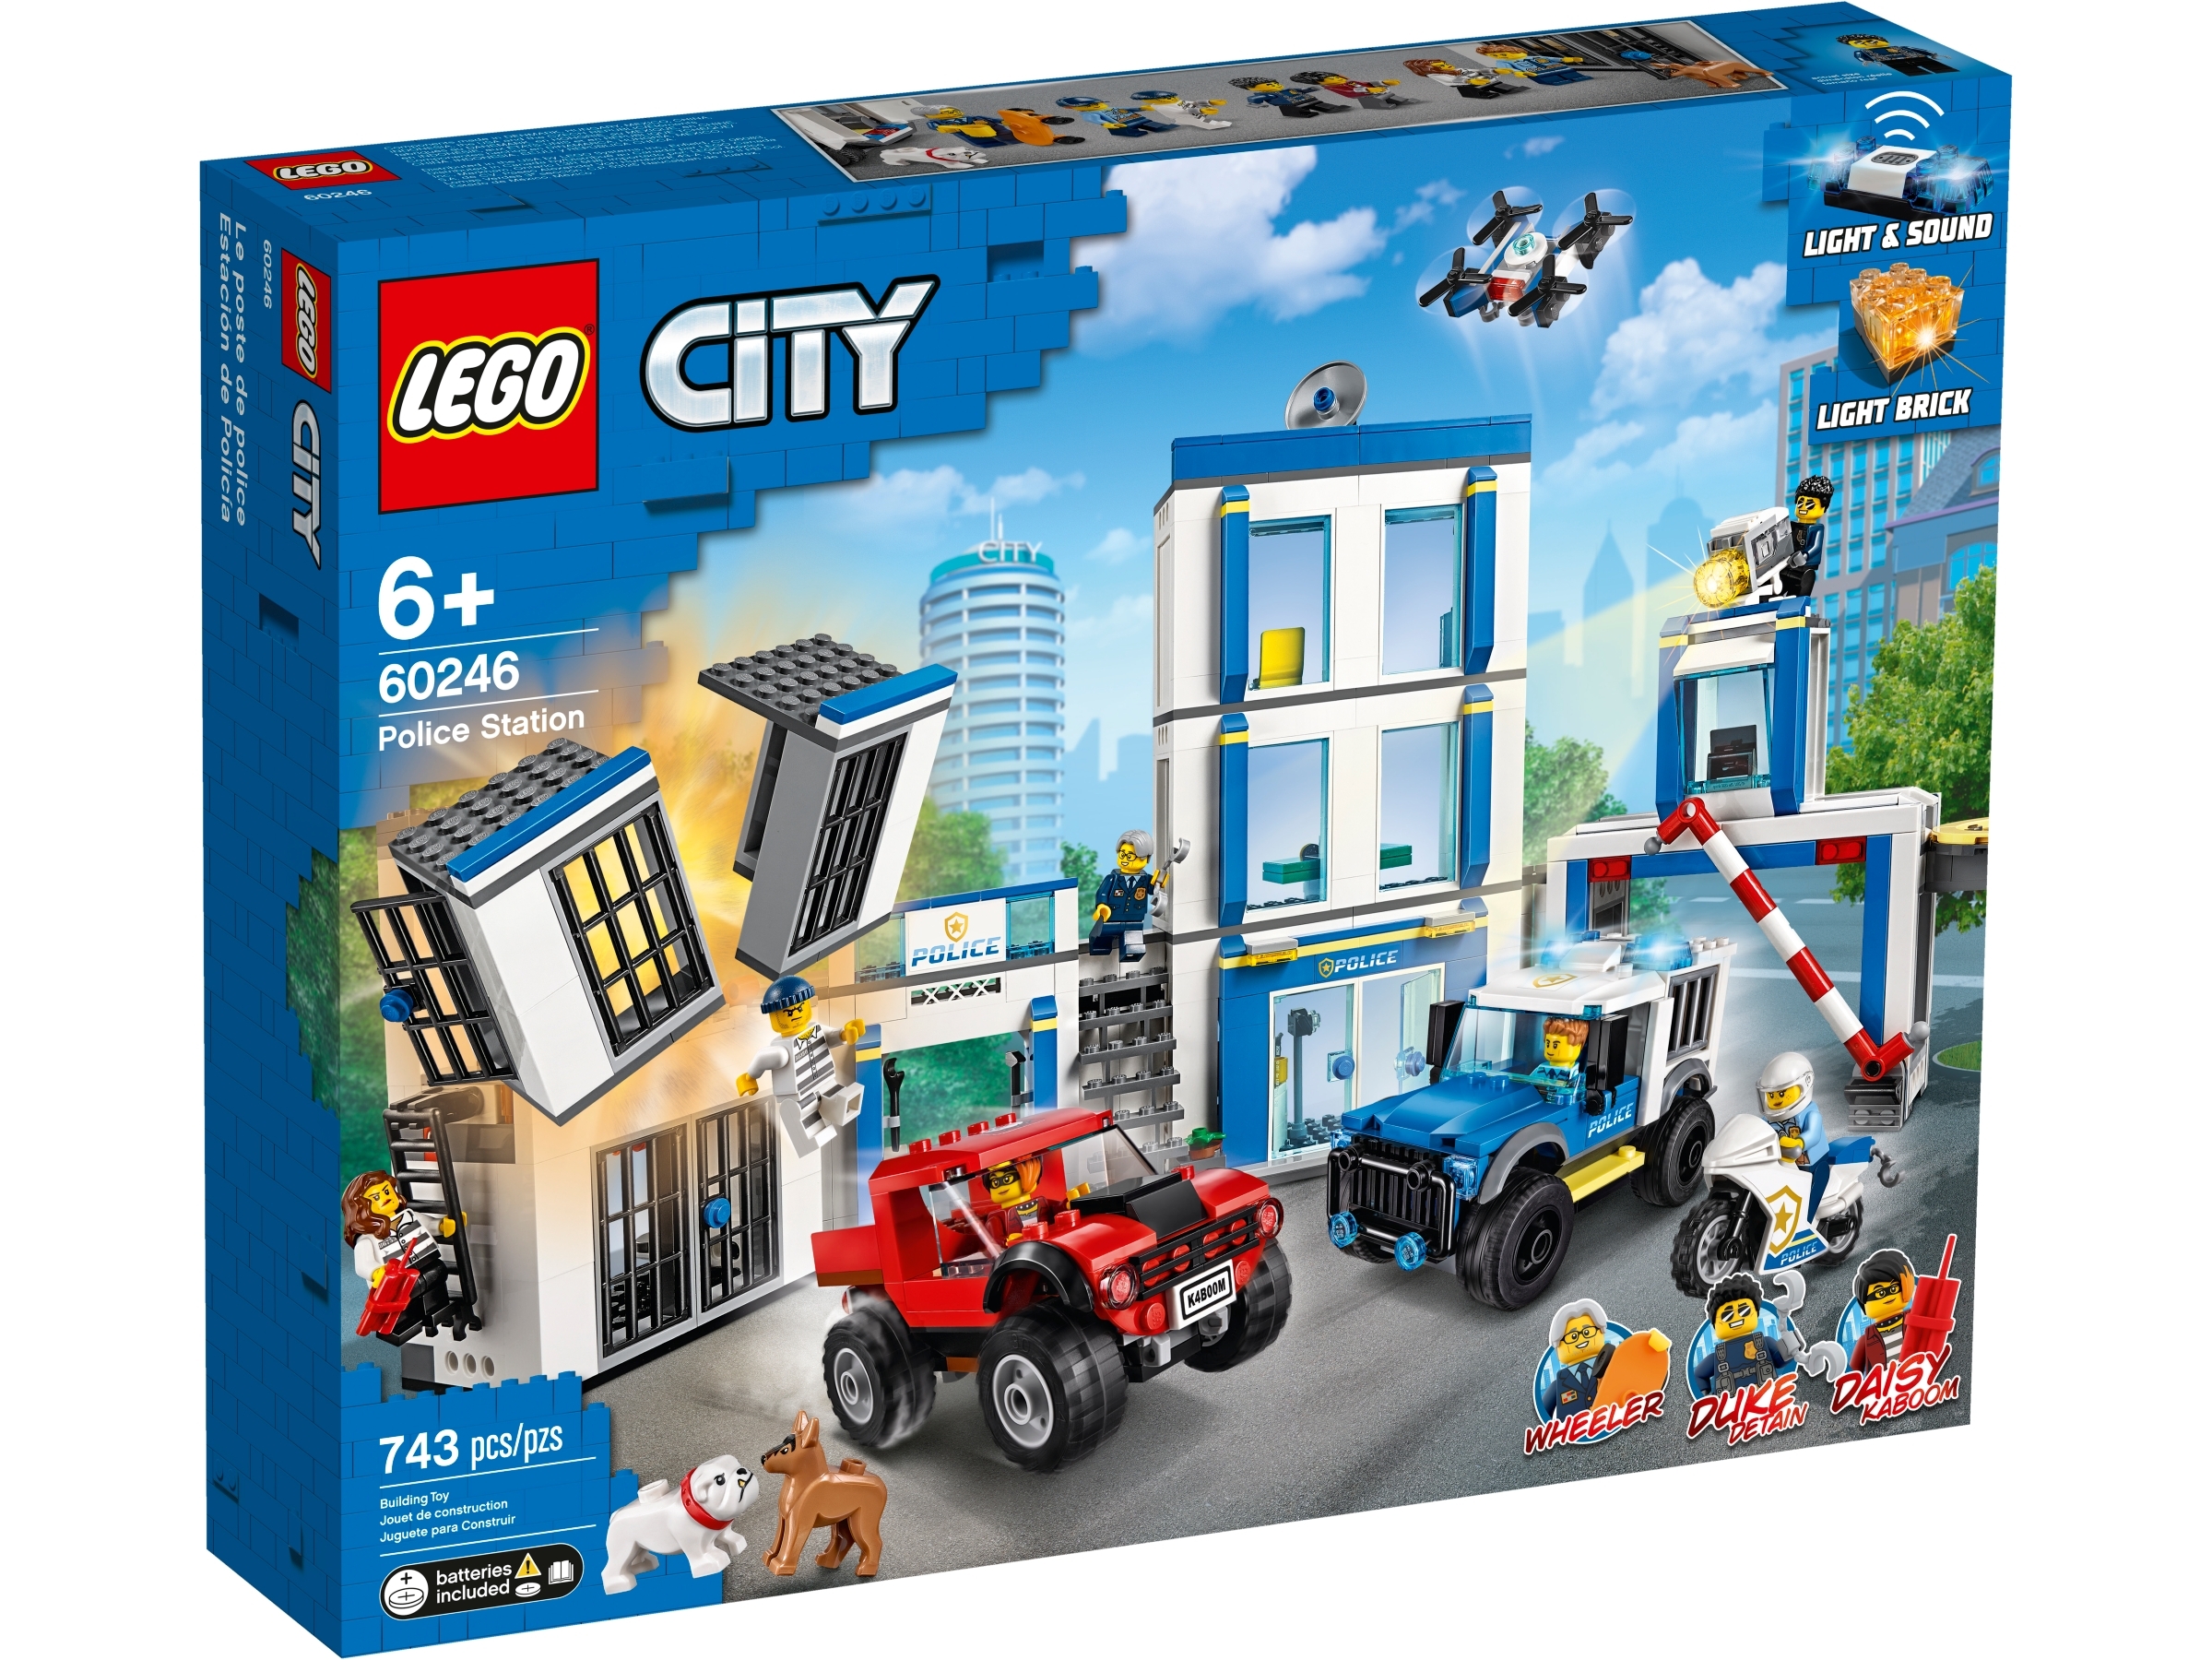 LEGO 40372 City Polizei Minifiguren-set Neu/ovp/versiegelt for sale online 